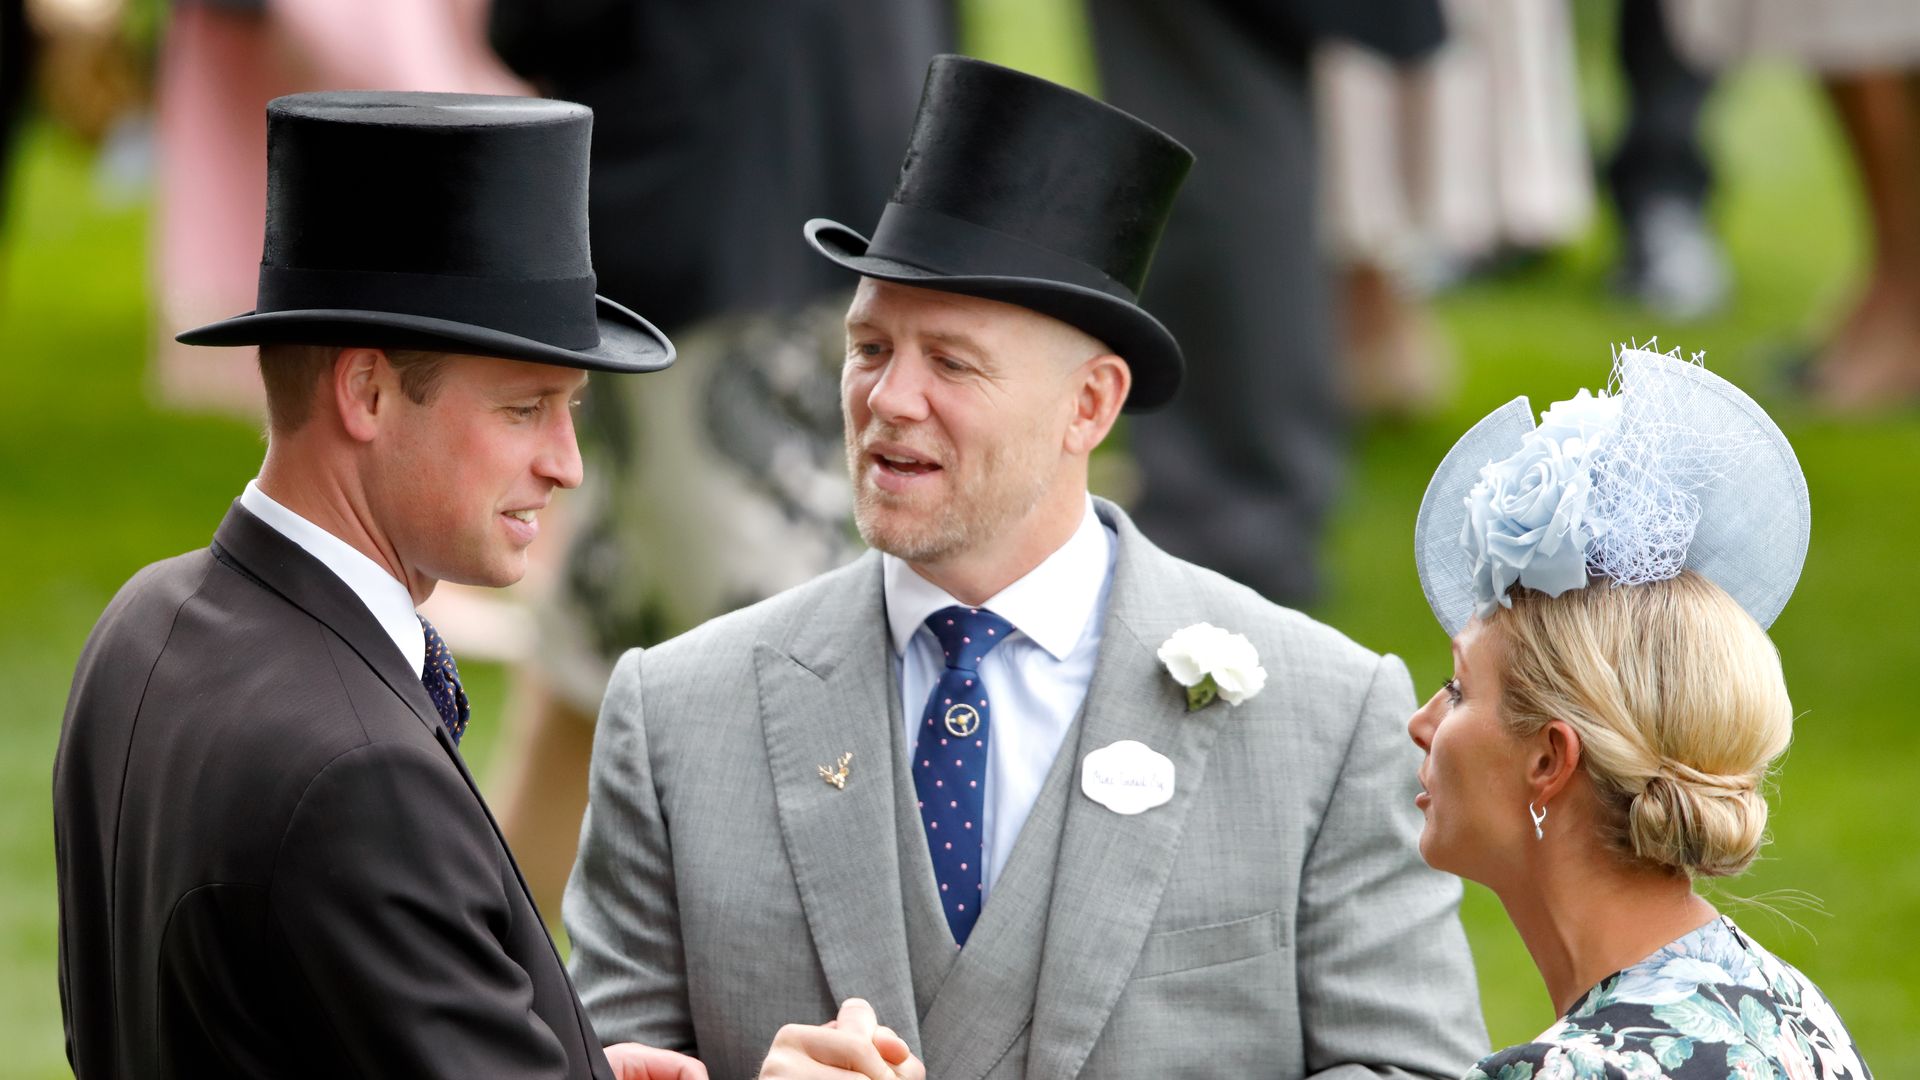 Mike and Zara Tindall and Prince William at Royal Ascot 2019